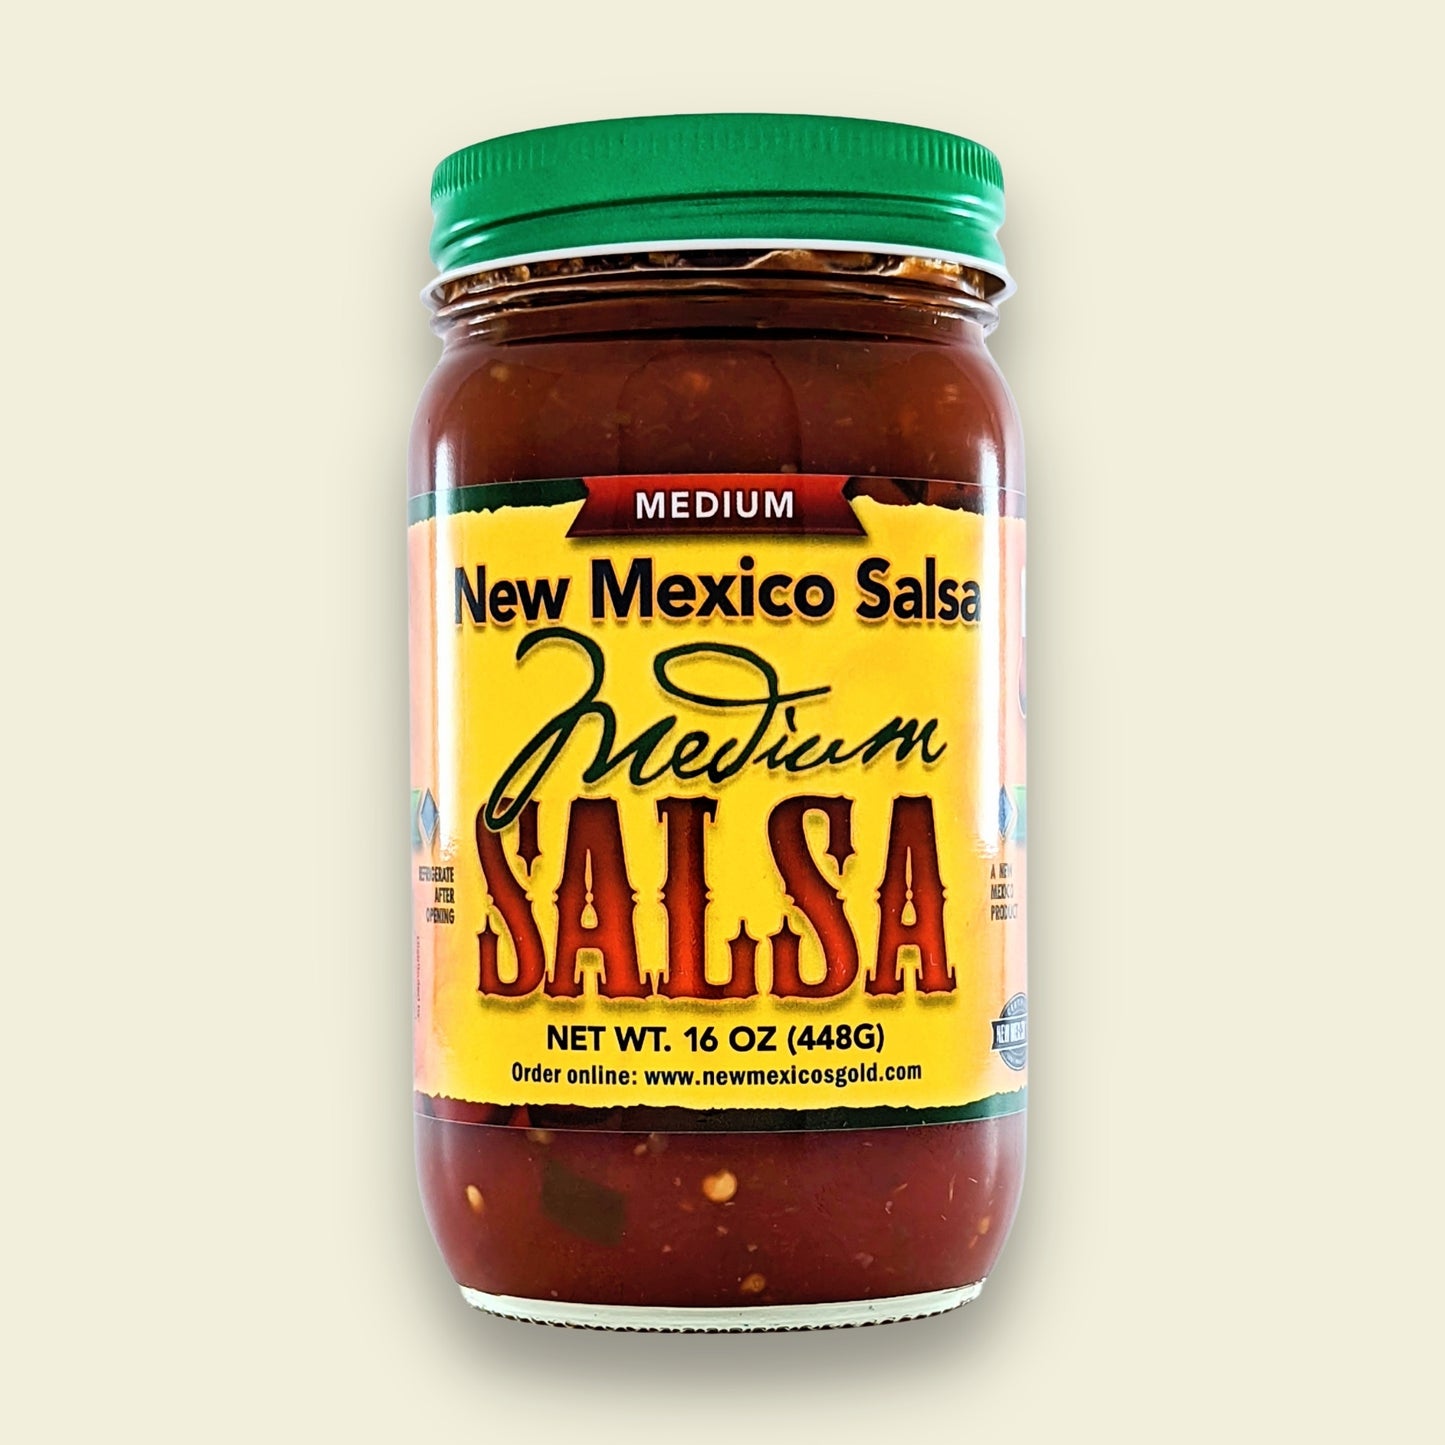 New Mexico Salsa